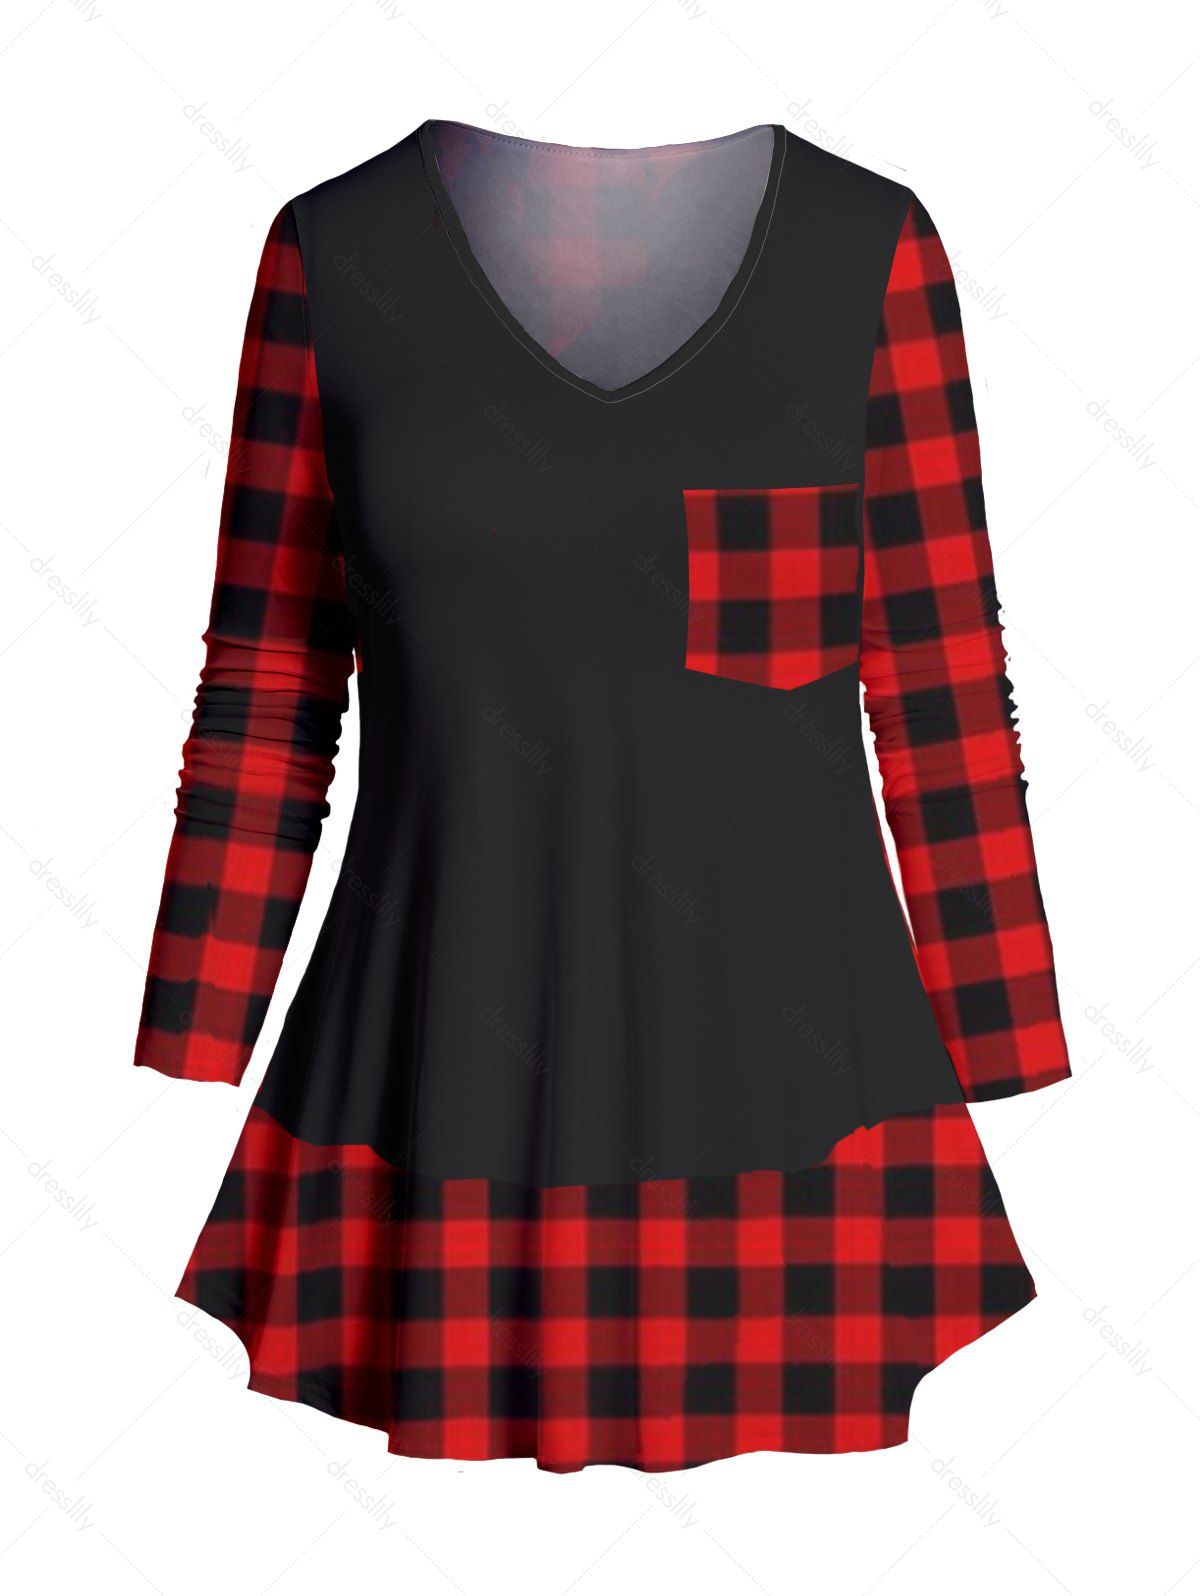 Dresslily Fashion Women Plus Size Plaid Print T-shirt Long Sleeve V Neck Curved Hem Casual Tee Clothing 4x / us 22 Red